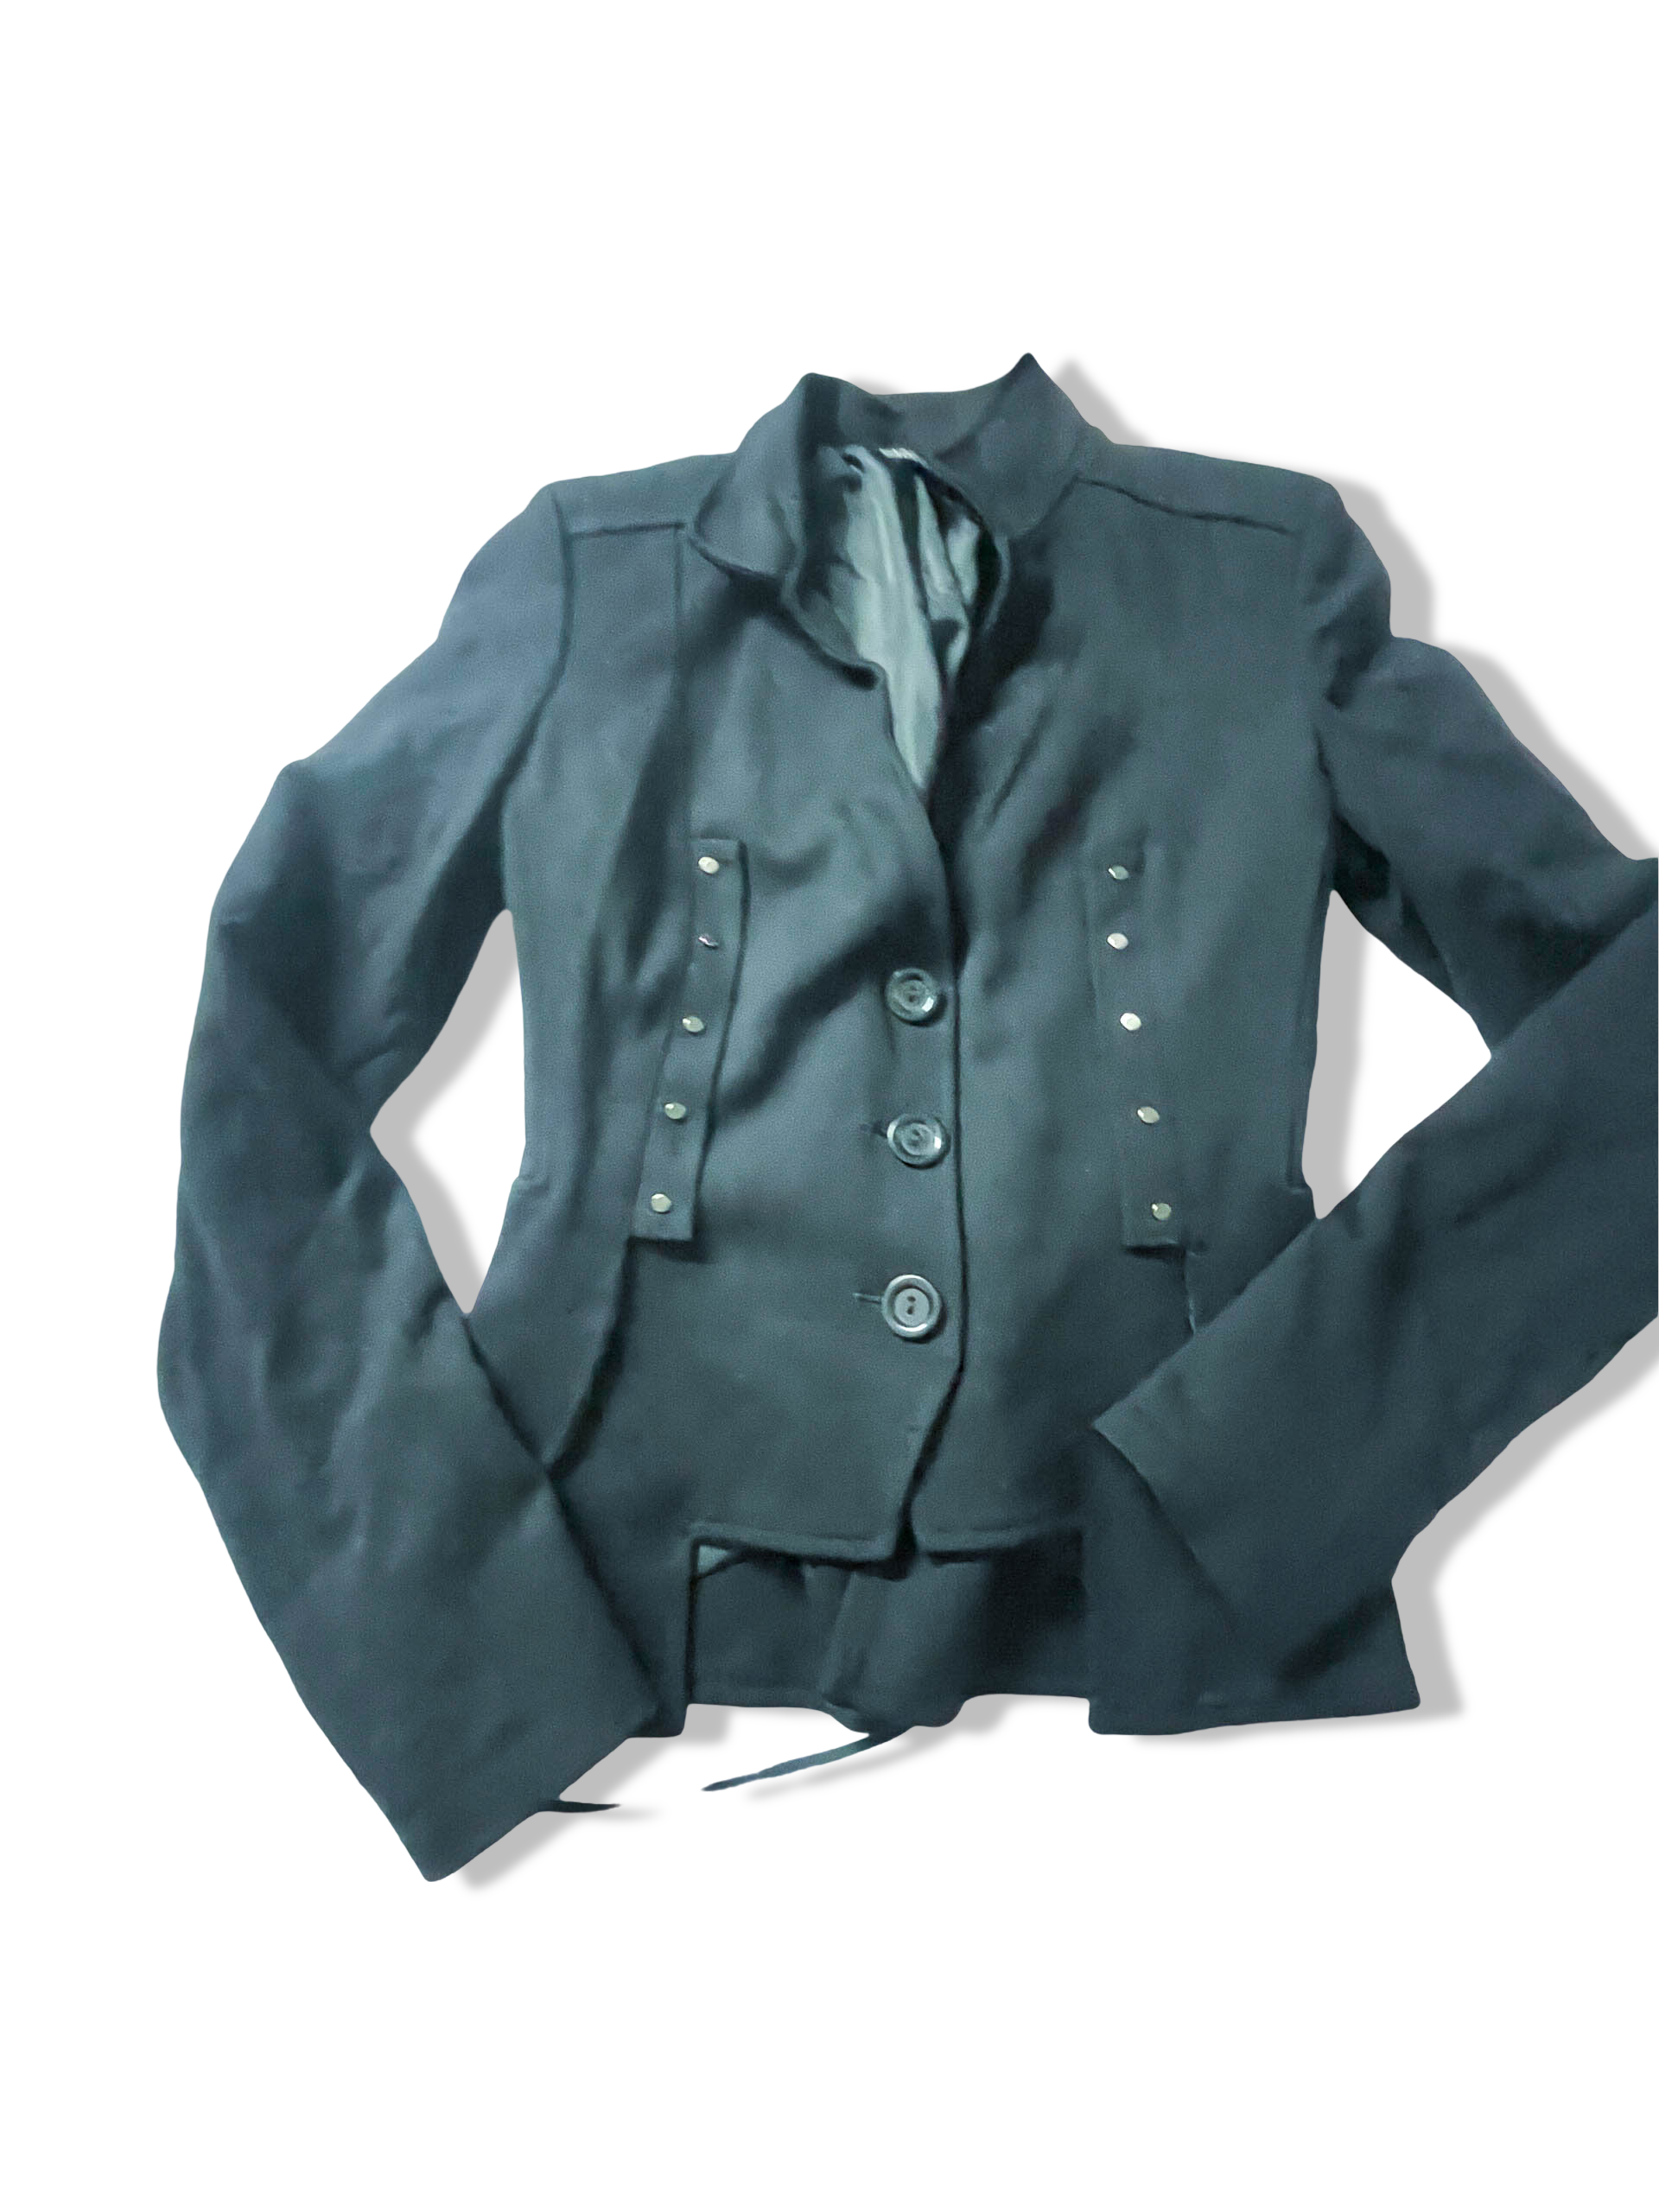 Vintage Black Women's Military blazer jacket in XS/S|L23 W 11